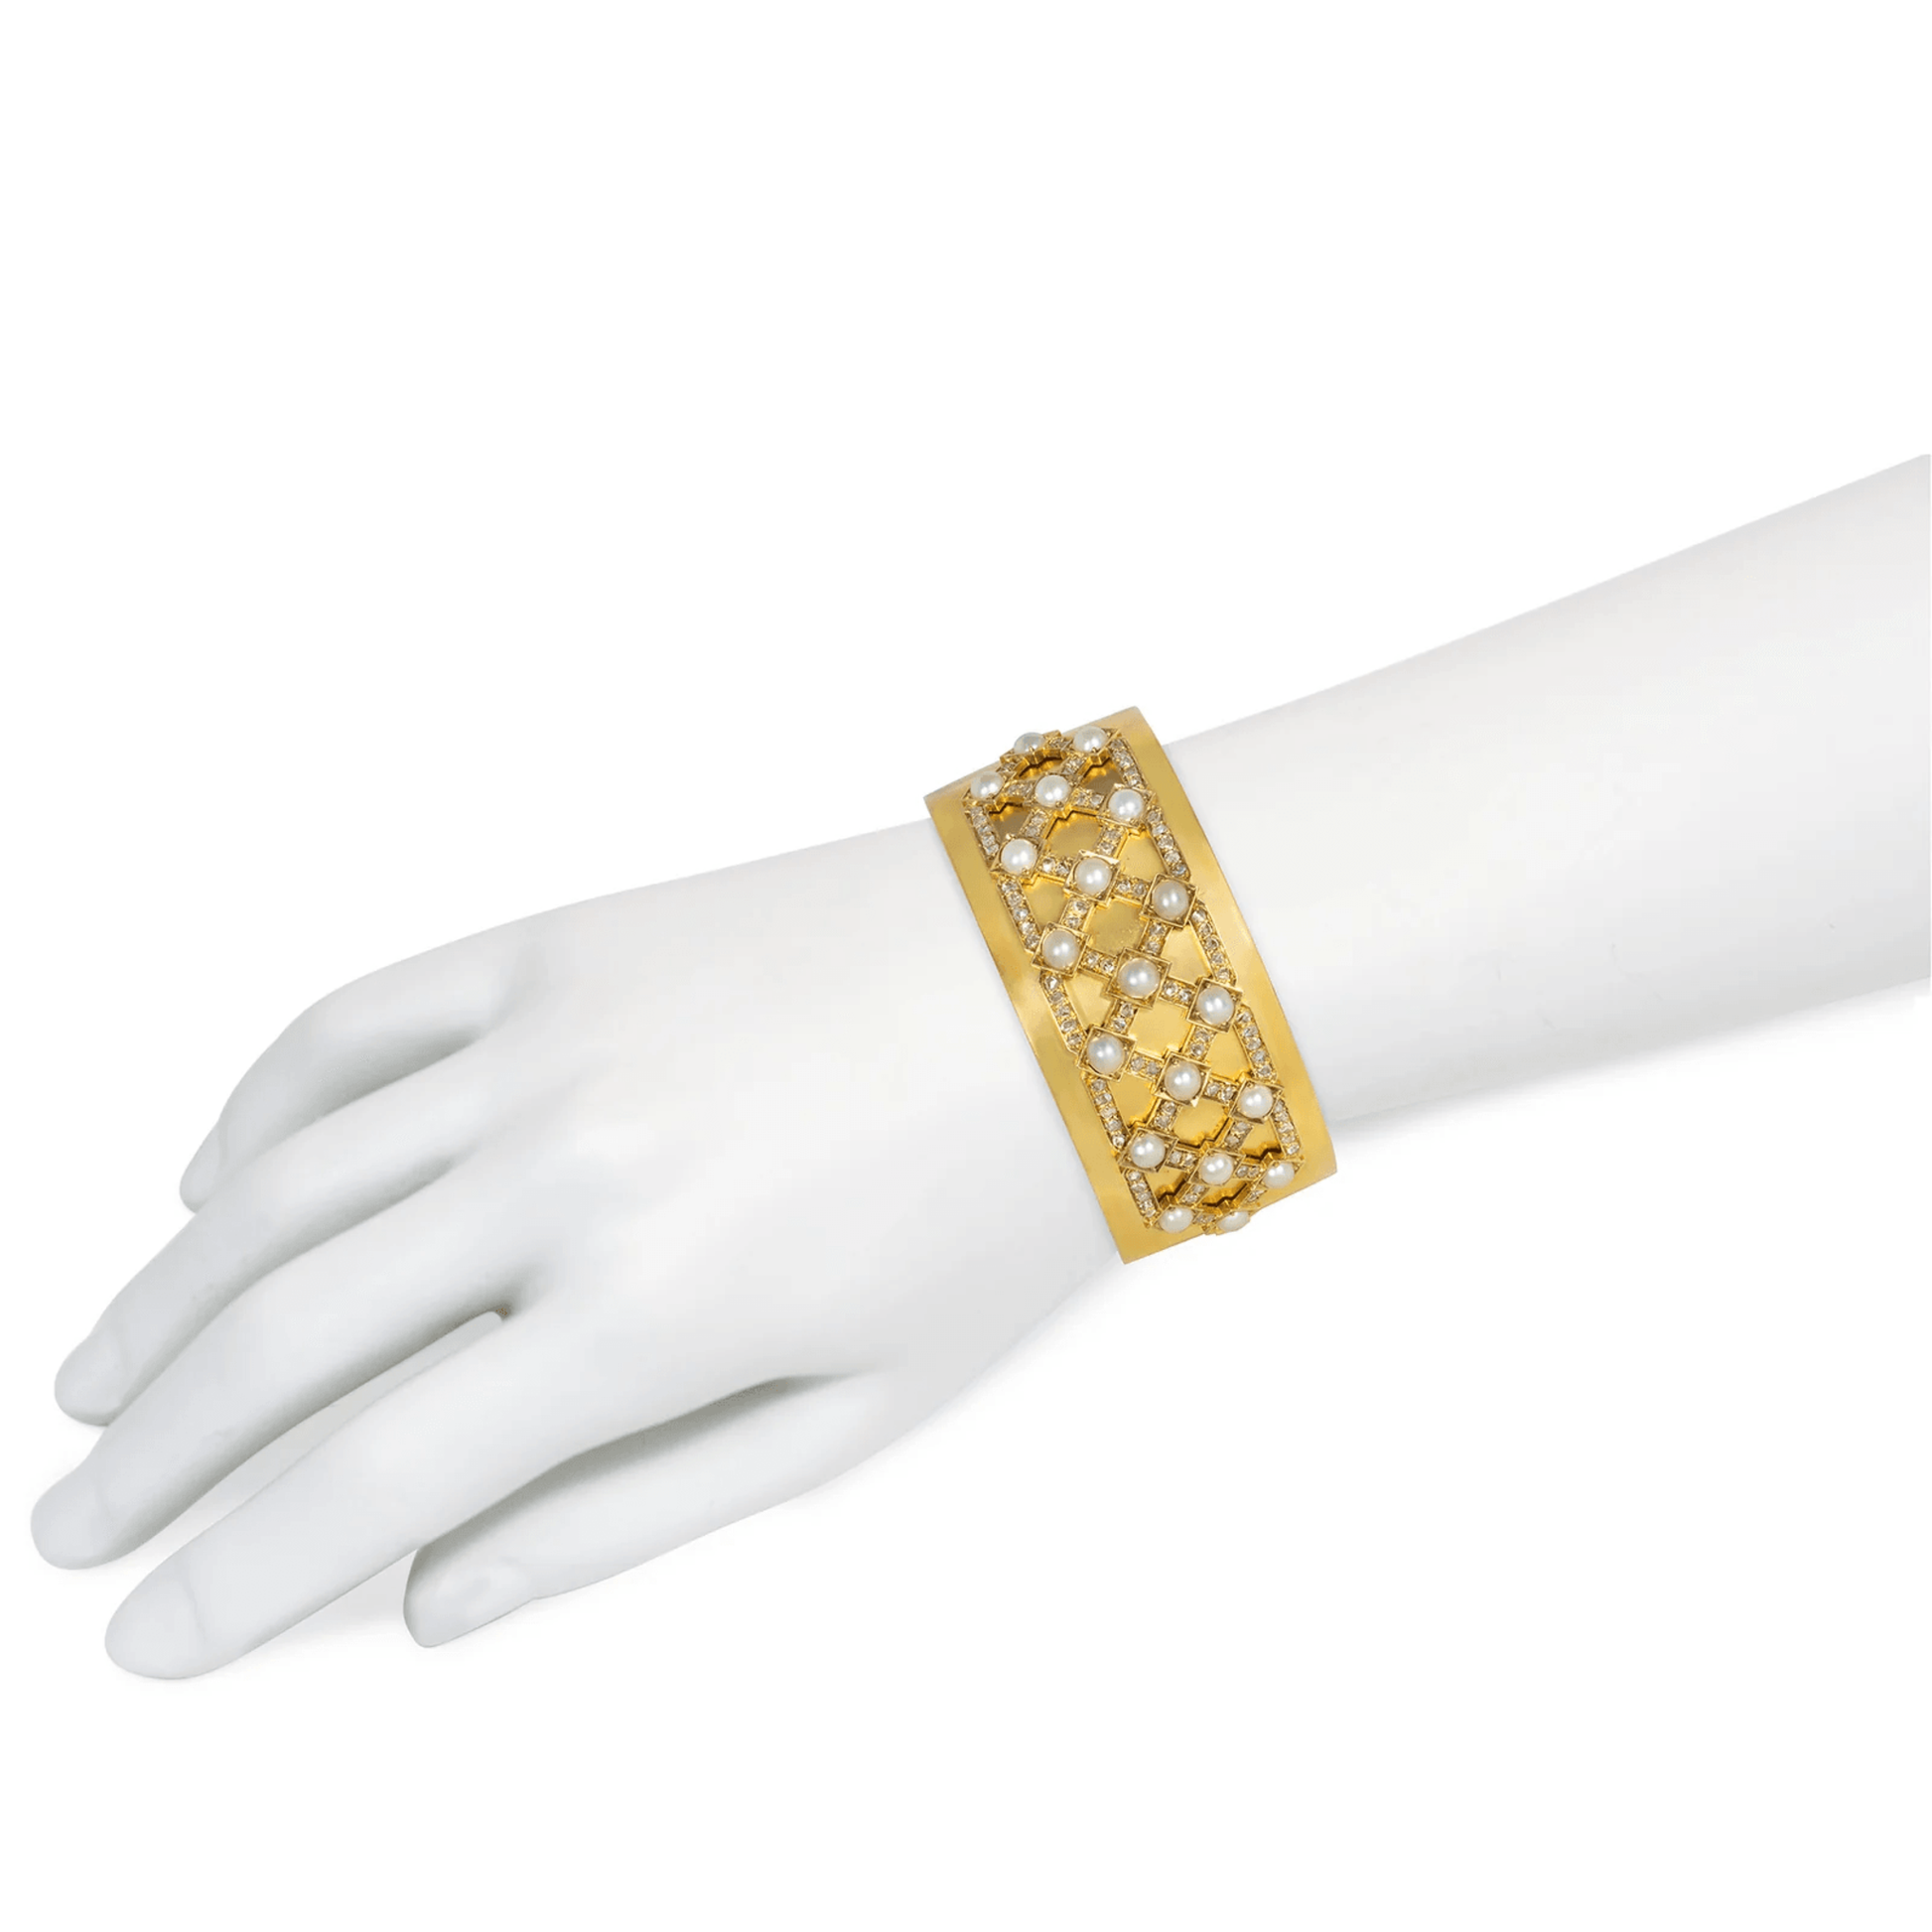 Victorian 15KT Yellow Gold Diamond & Pearl Bracelet on wrist